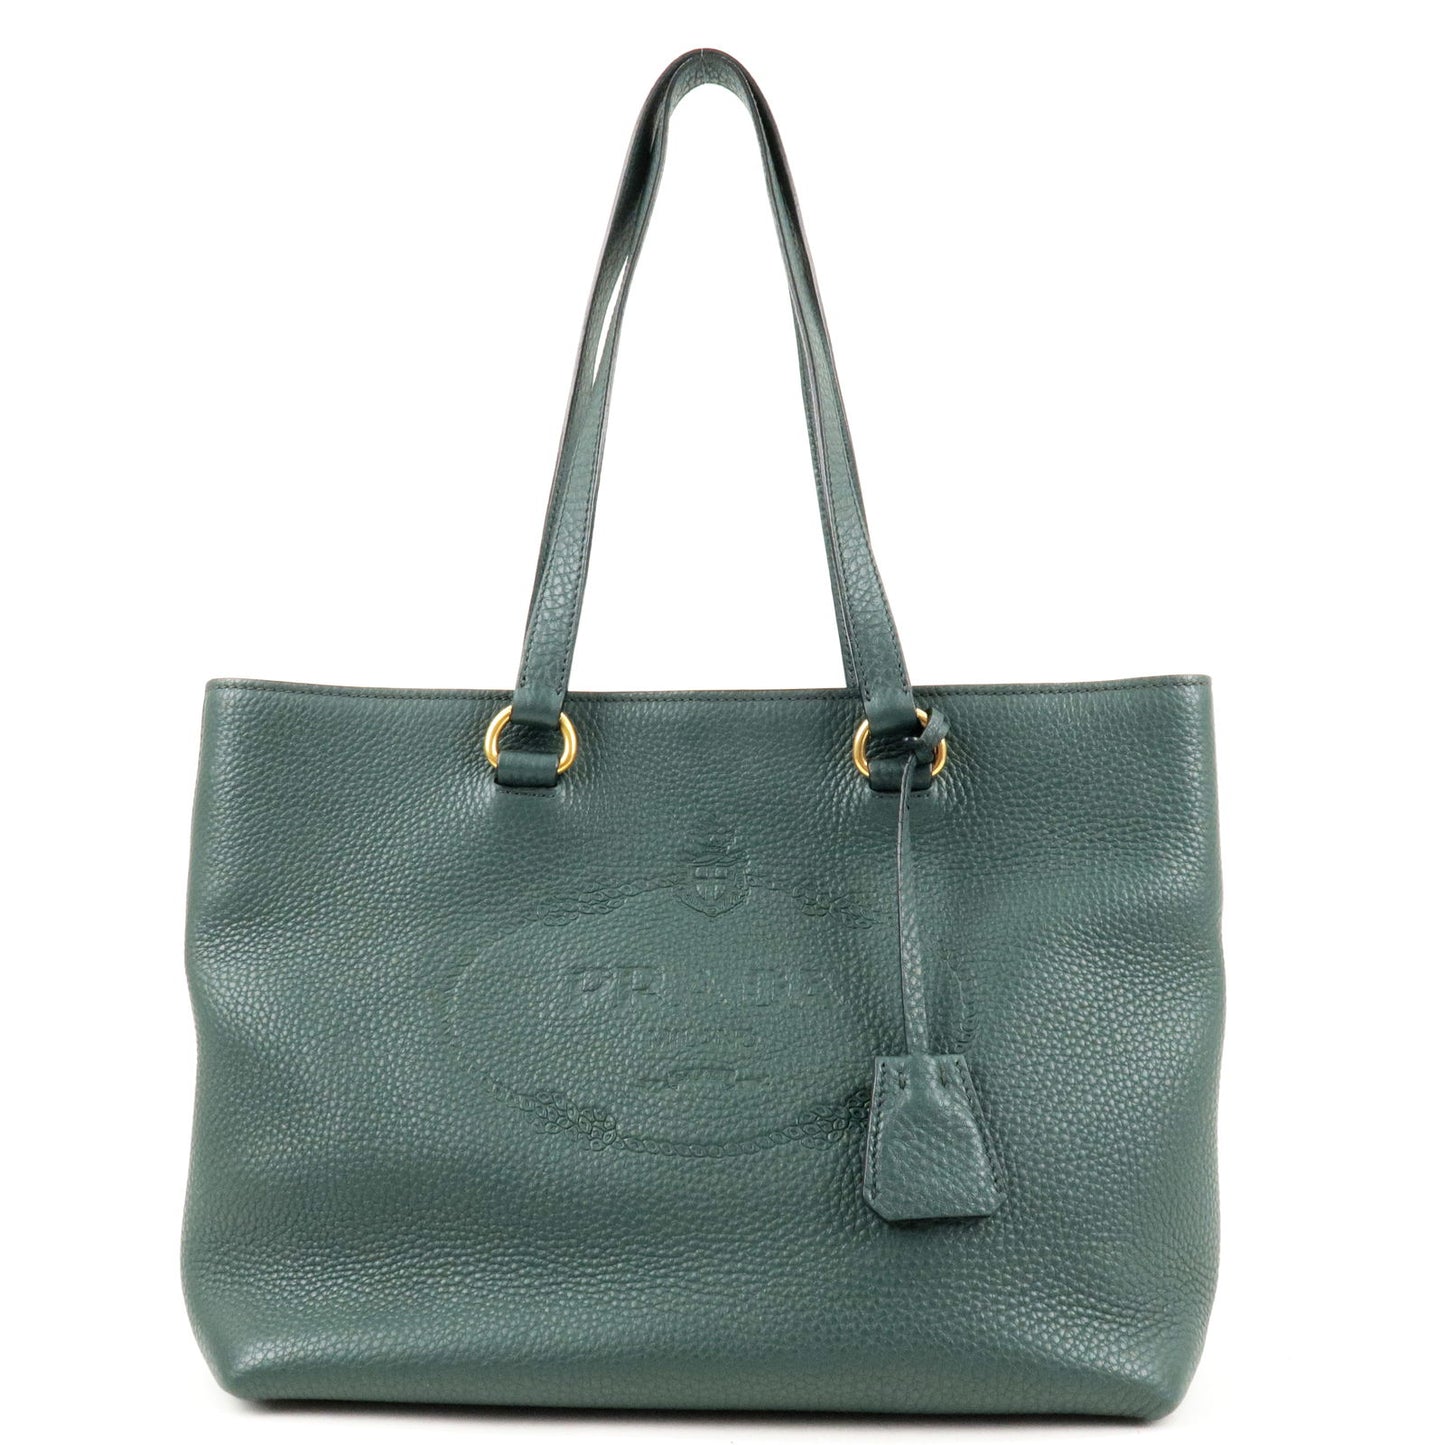 PRADA-Logo-Leather-Tote-Bag-Hand-Bag-Green-1BG100